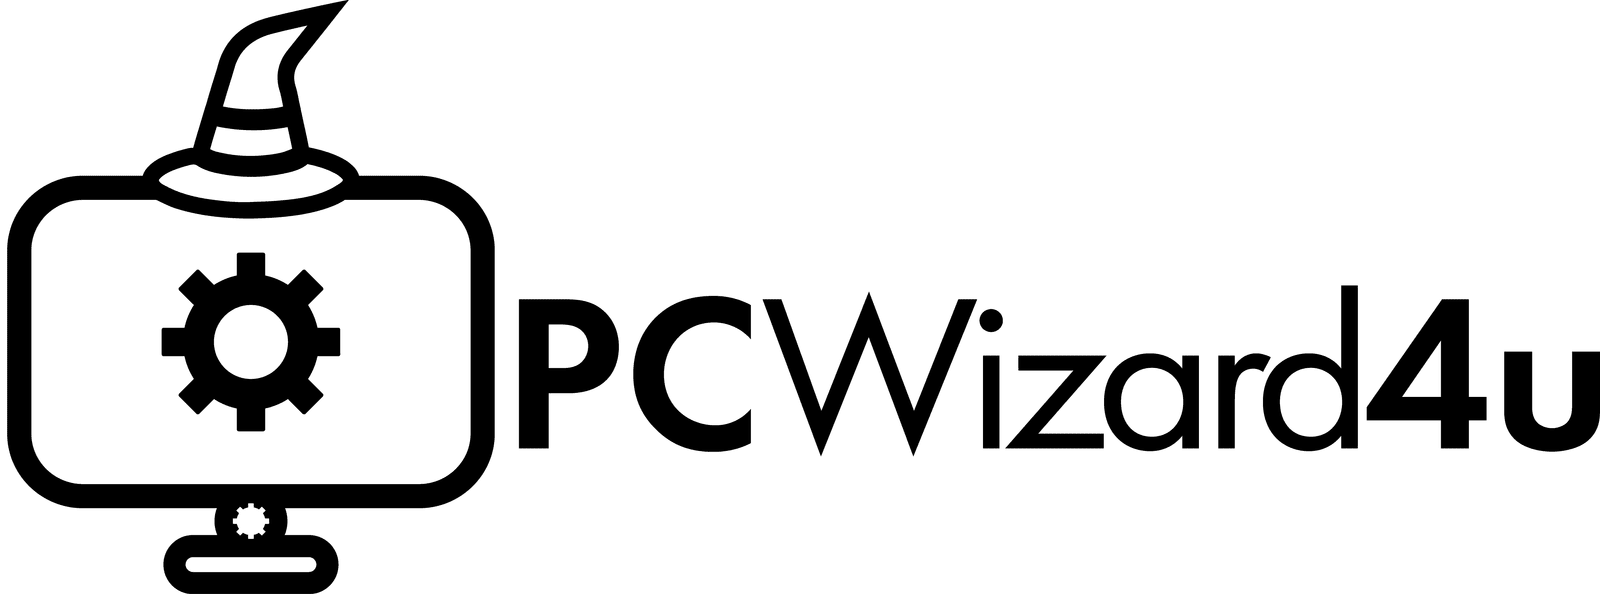 PCwizard4u - Expert PC, Laptop Computer & Mobile Repairs